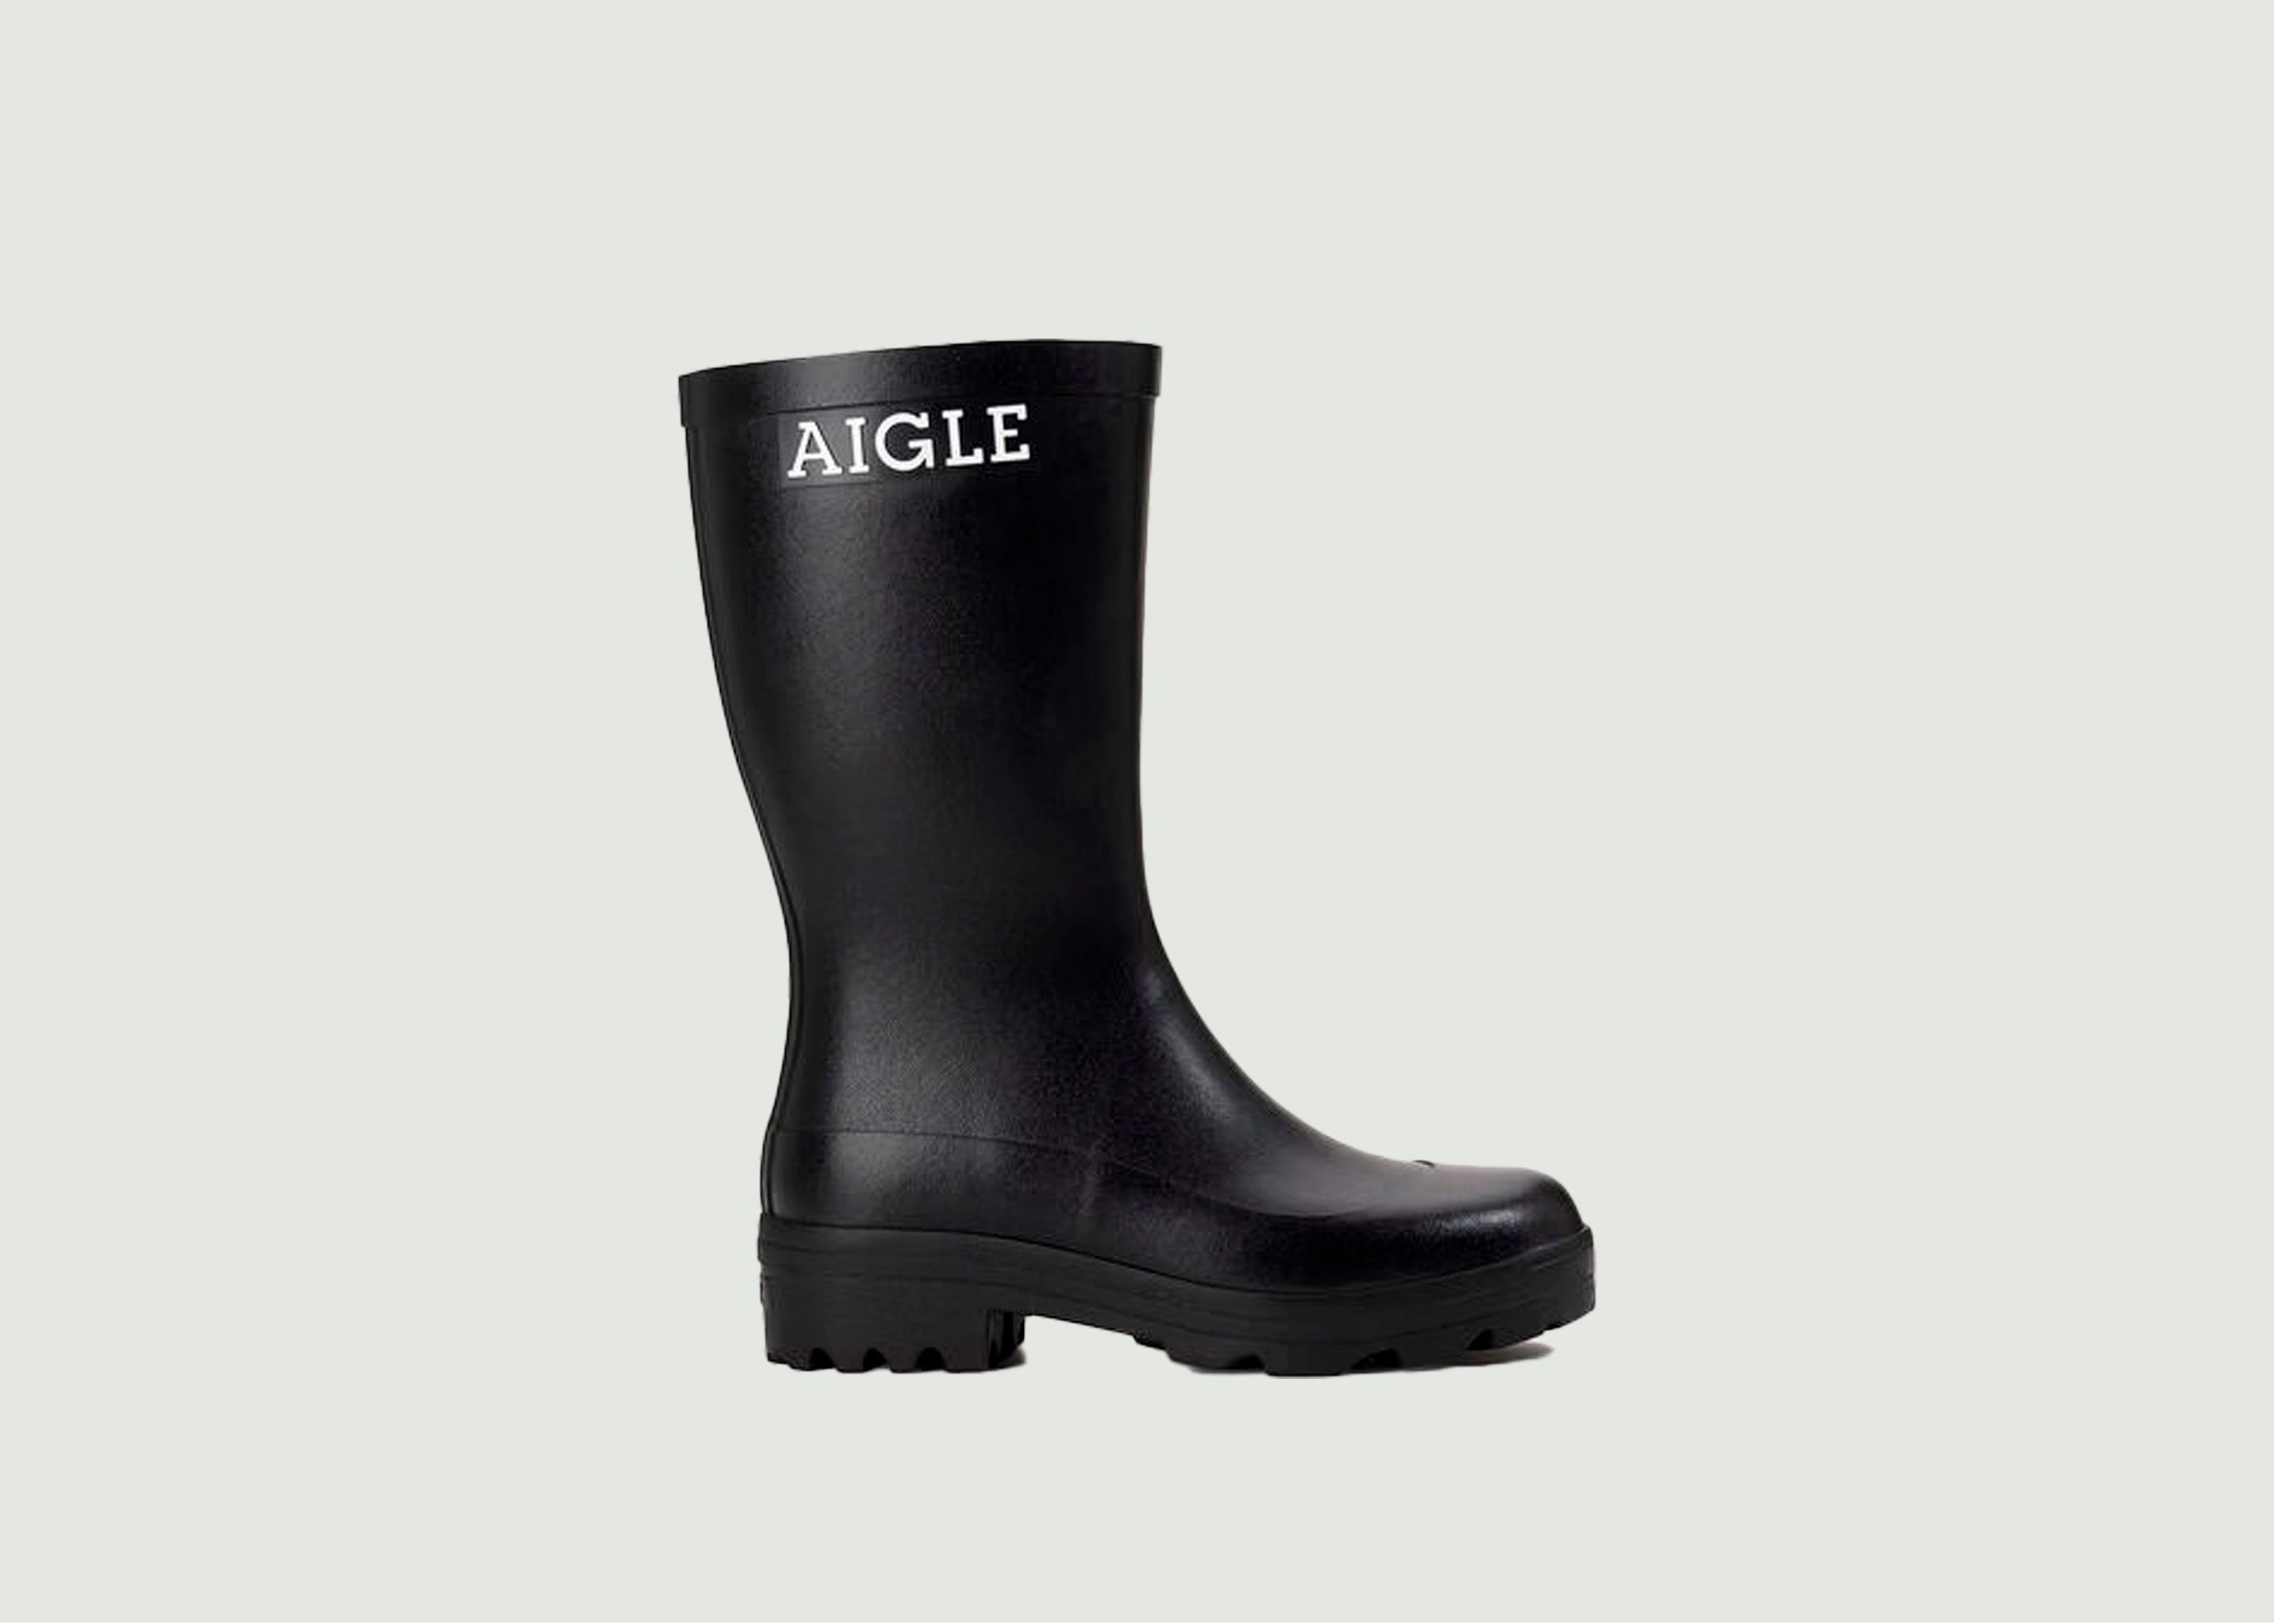 Atelier Aigle boots - Aigle